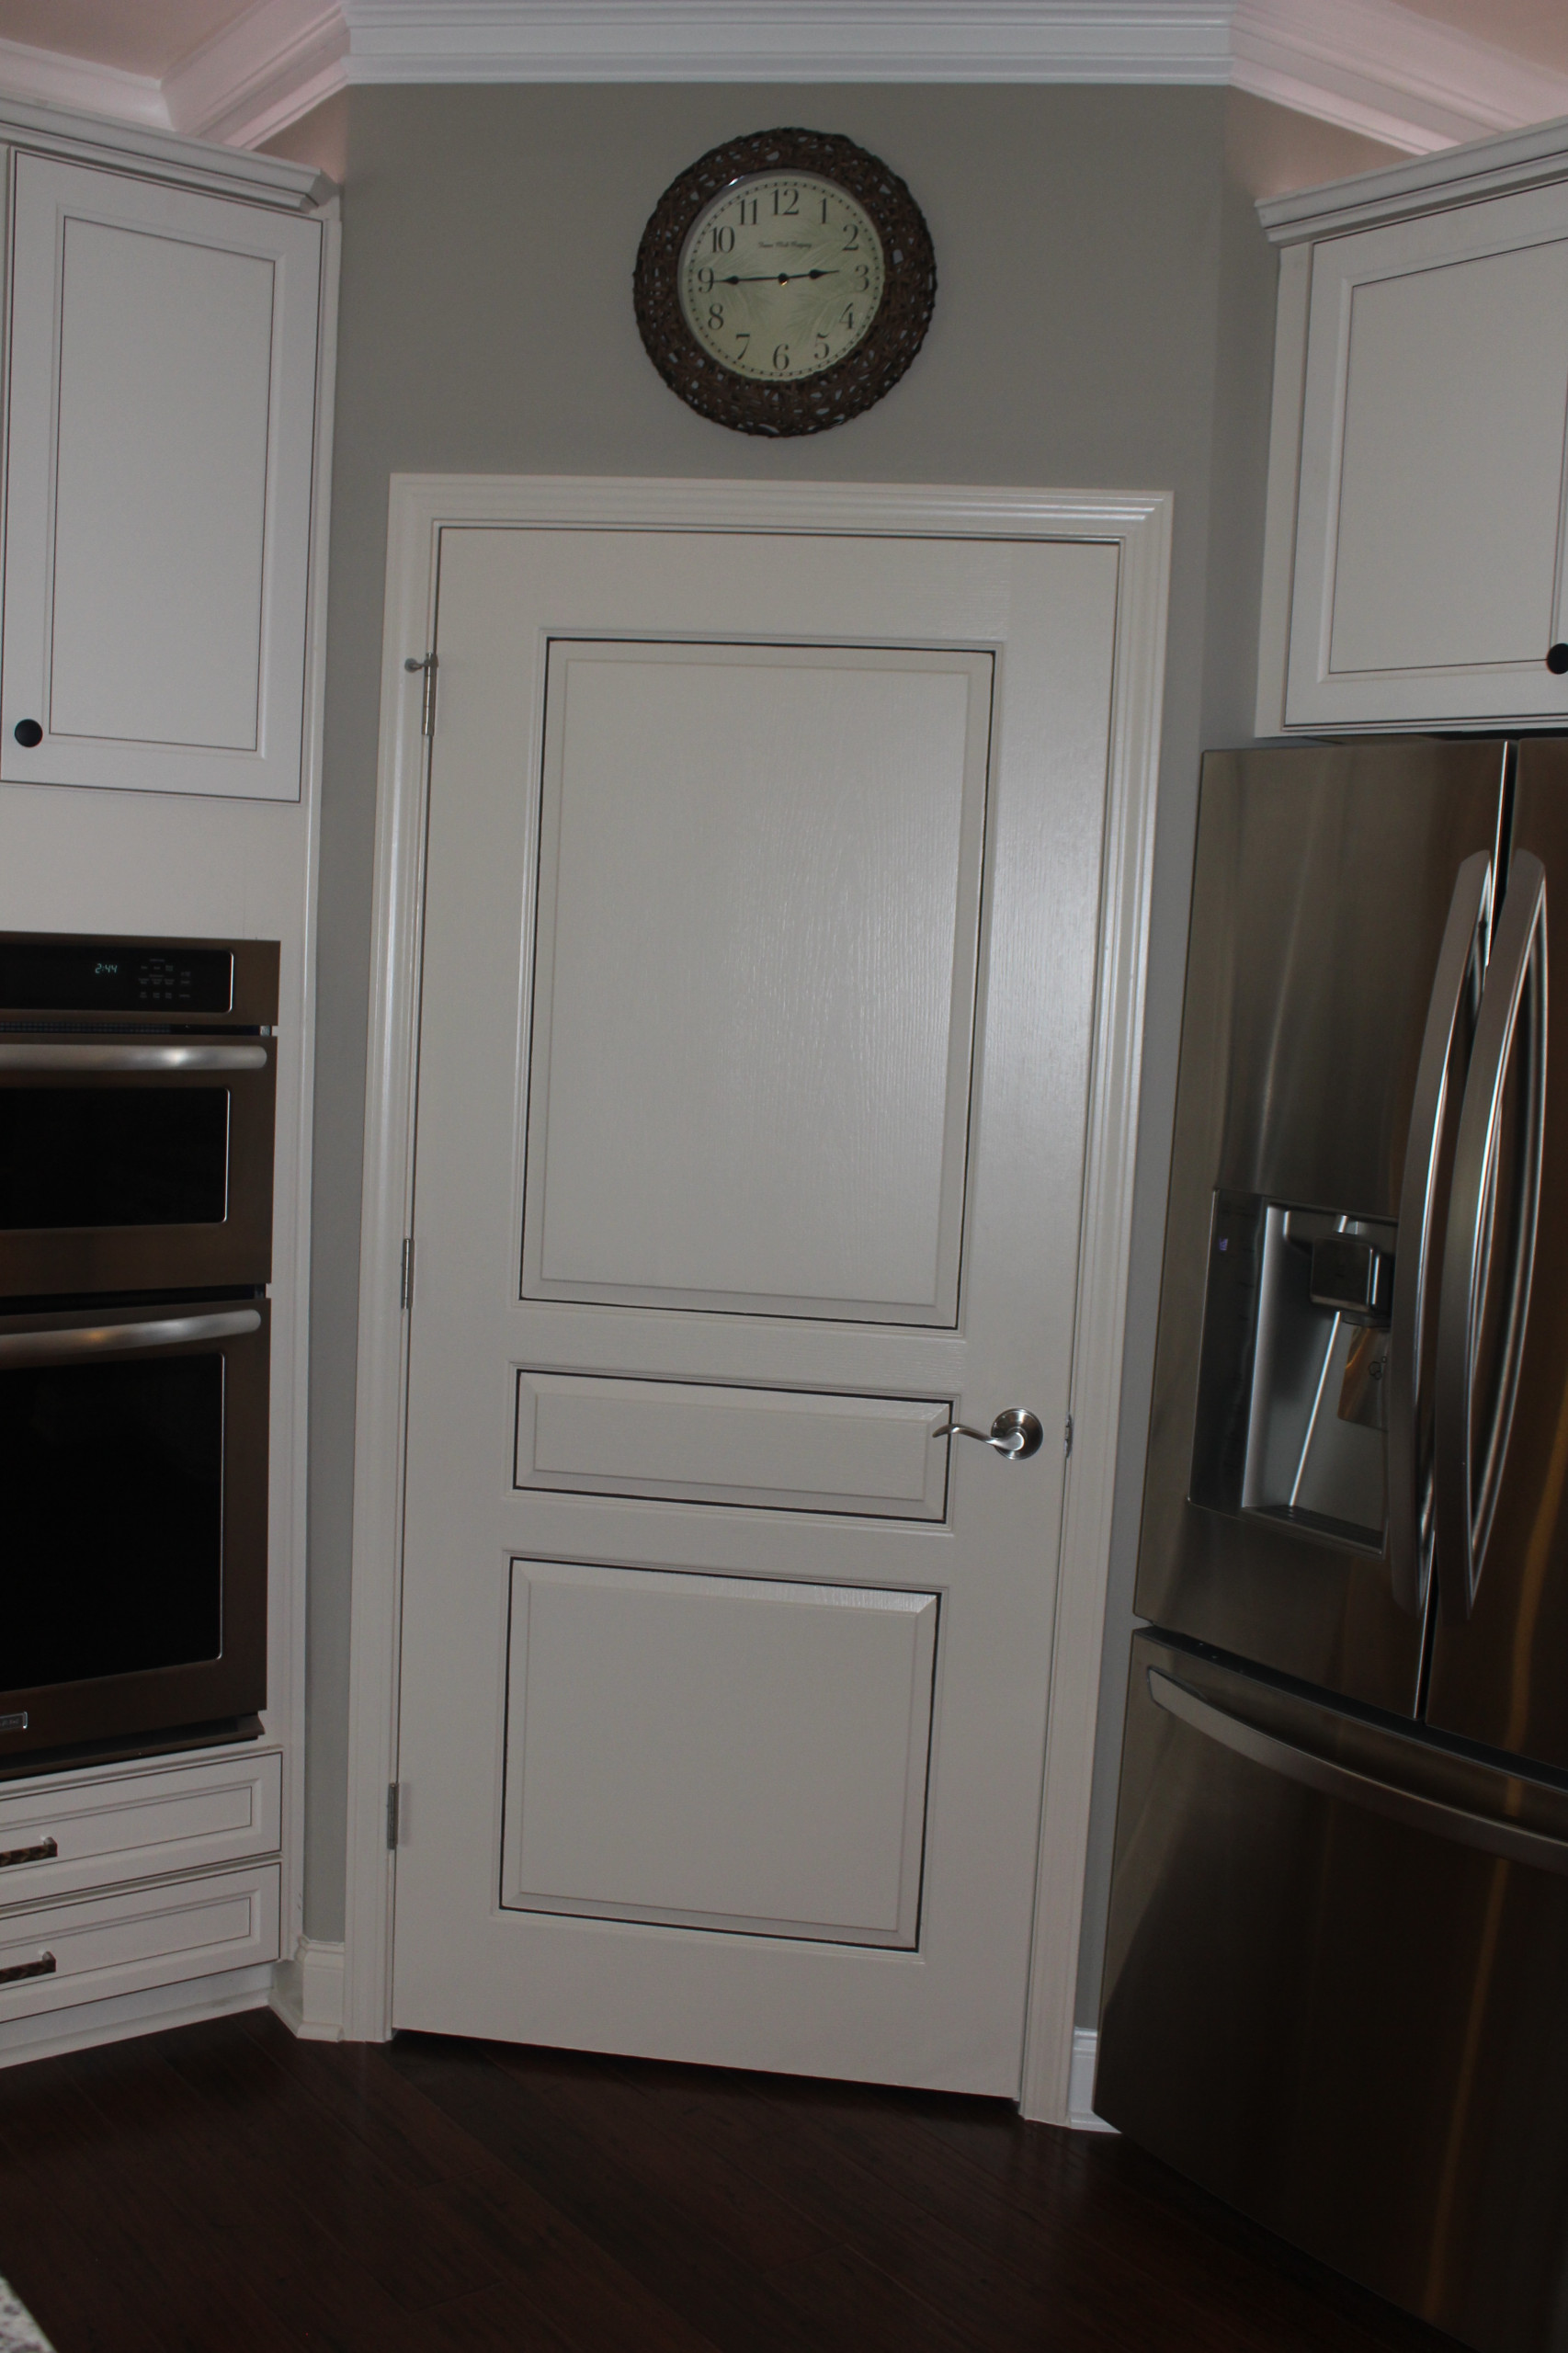 All standard kitchen cabinets were given a bronze glaze